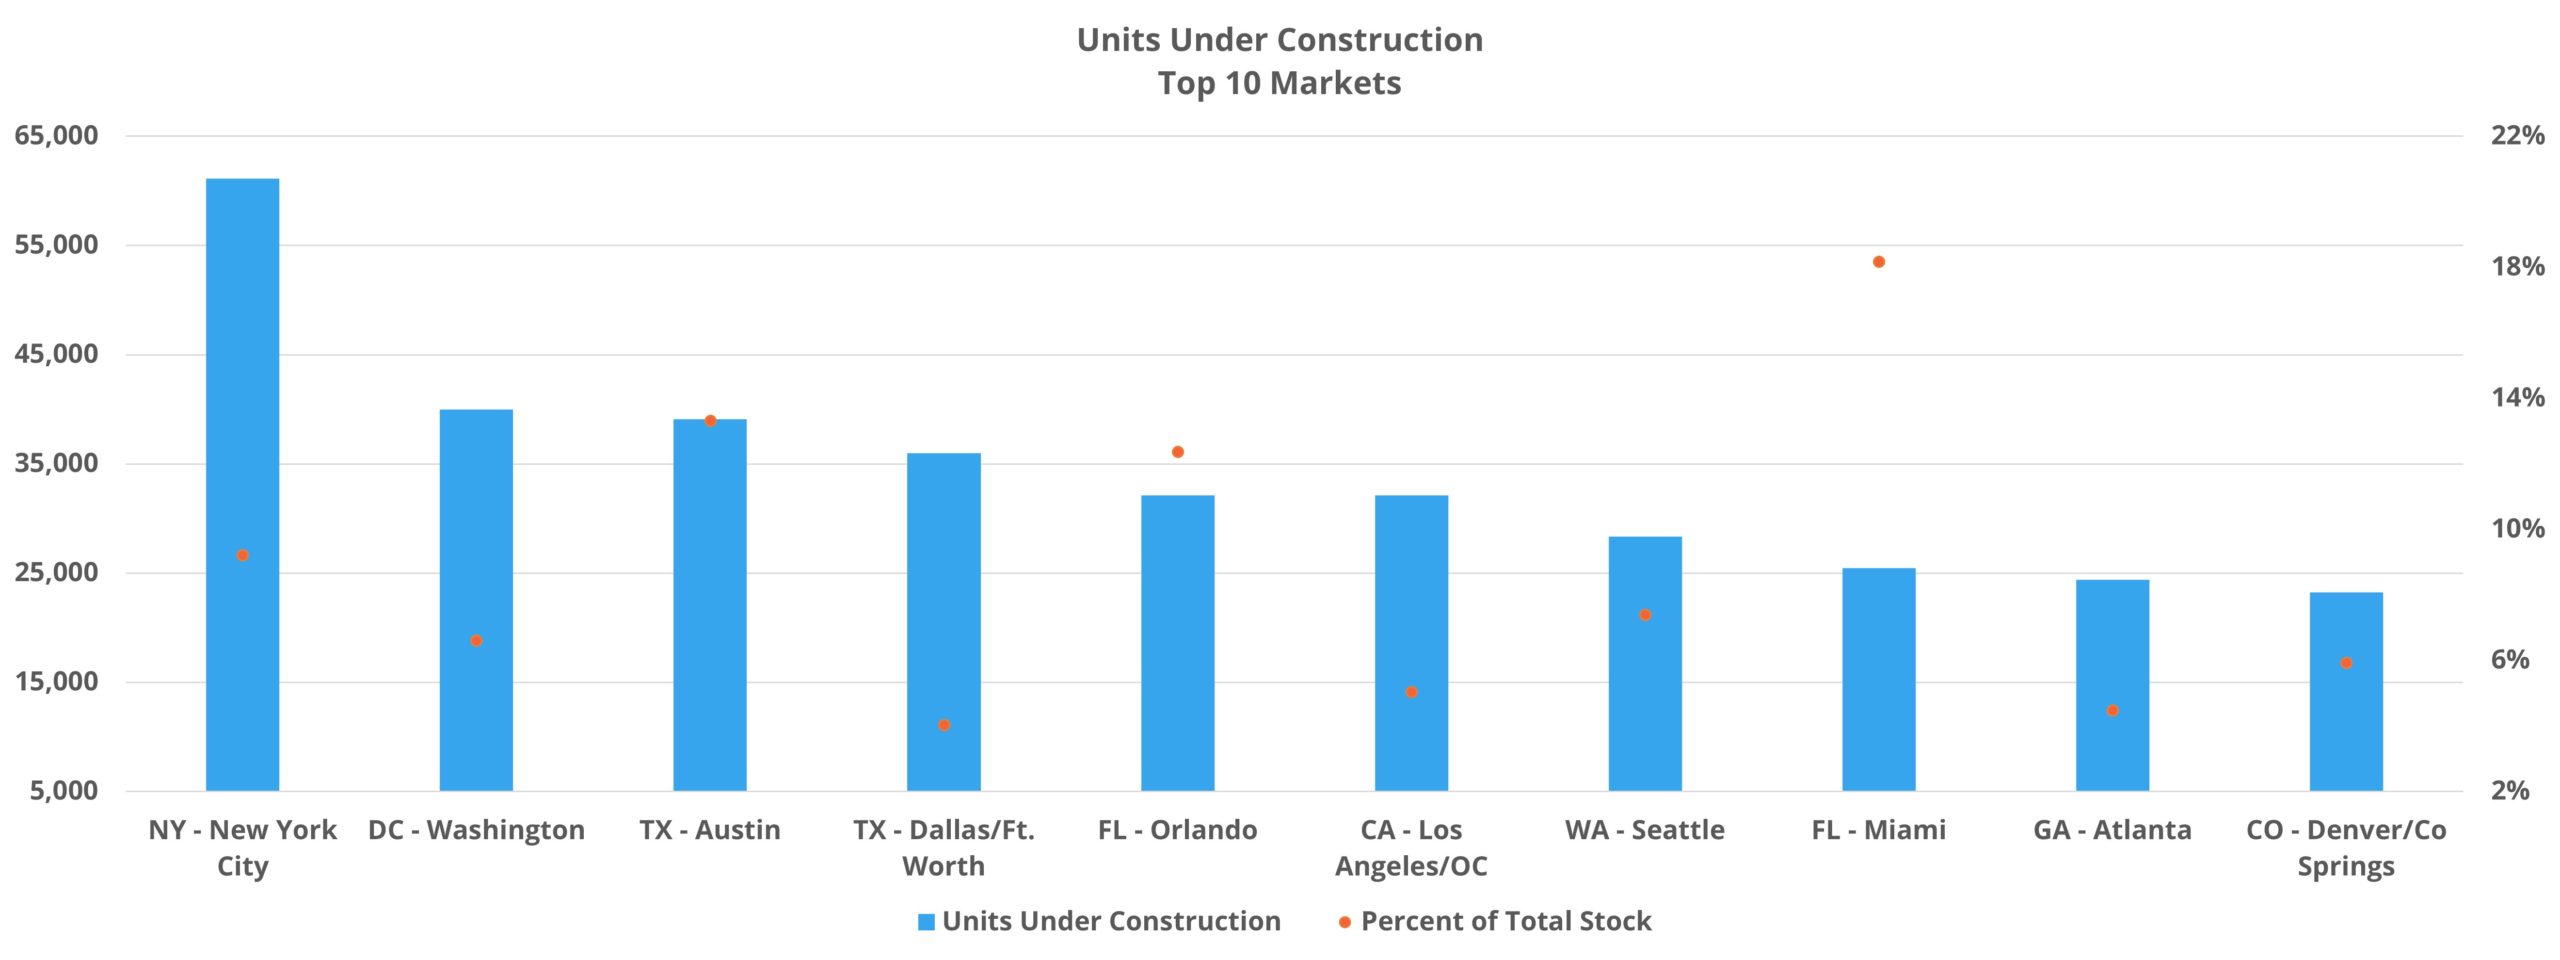 Units Under Construction